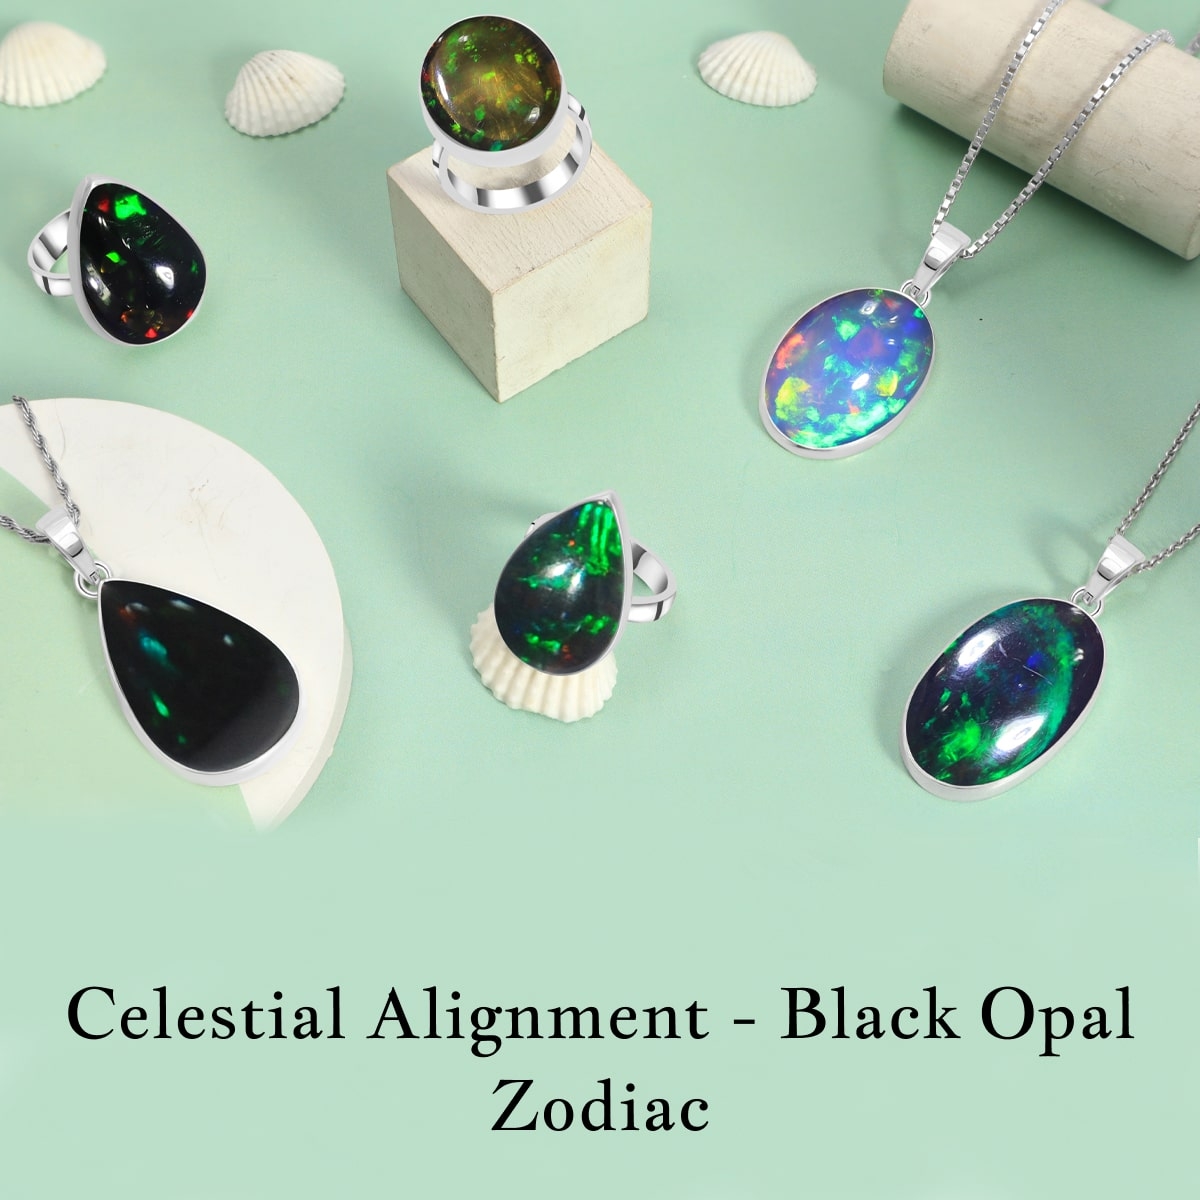 Black Opal Zodiac sign